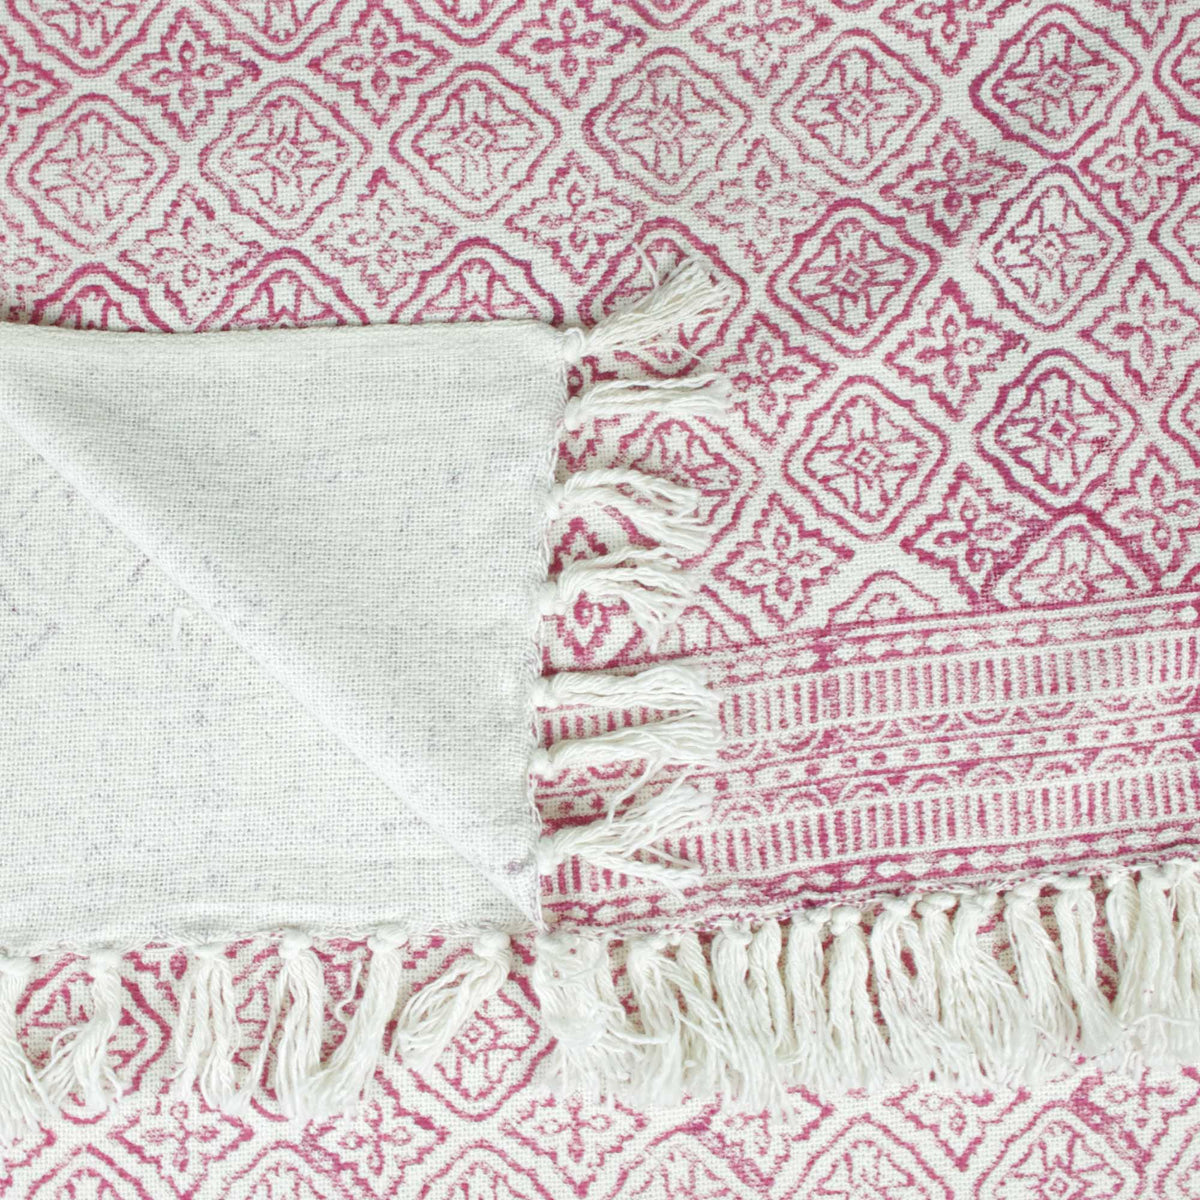 Block Printed Handloom Cotton Sofa Throw With Tassels -  Pink White Geometric